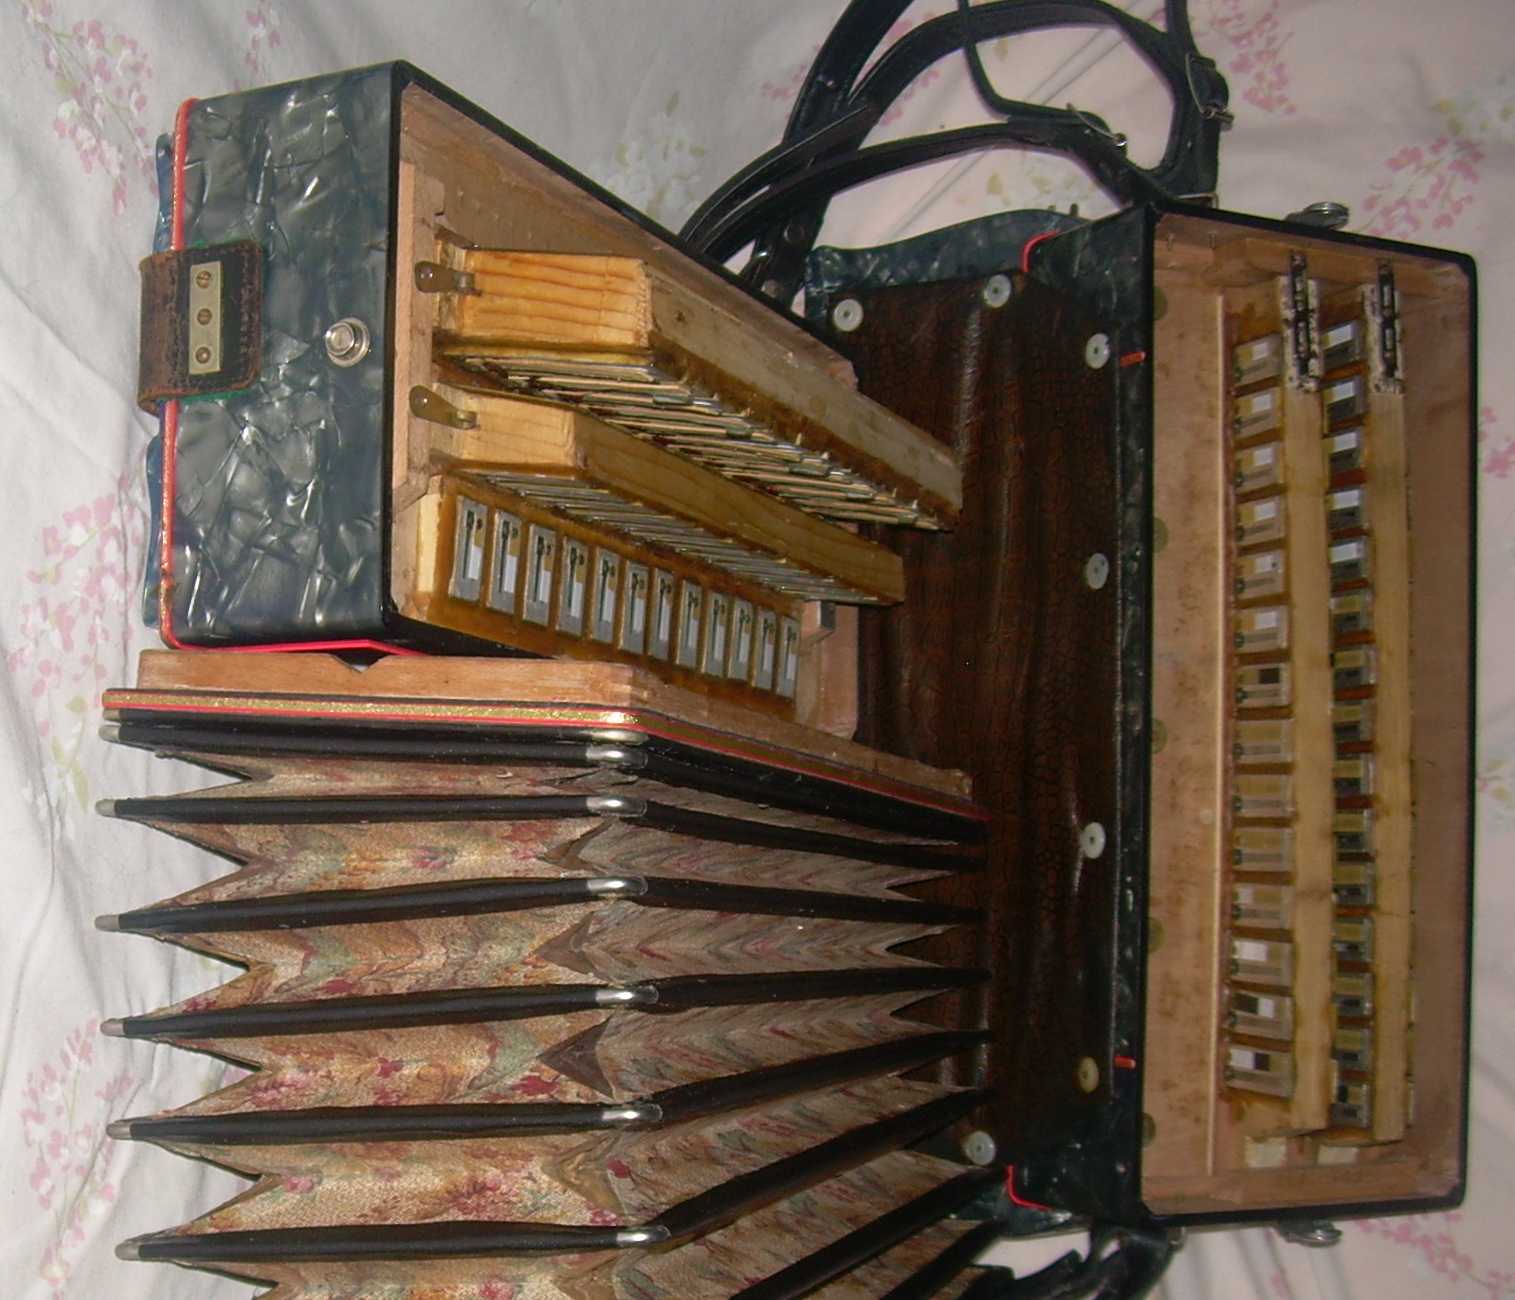 Inner workings of Michelangelo 36 bass accordion